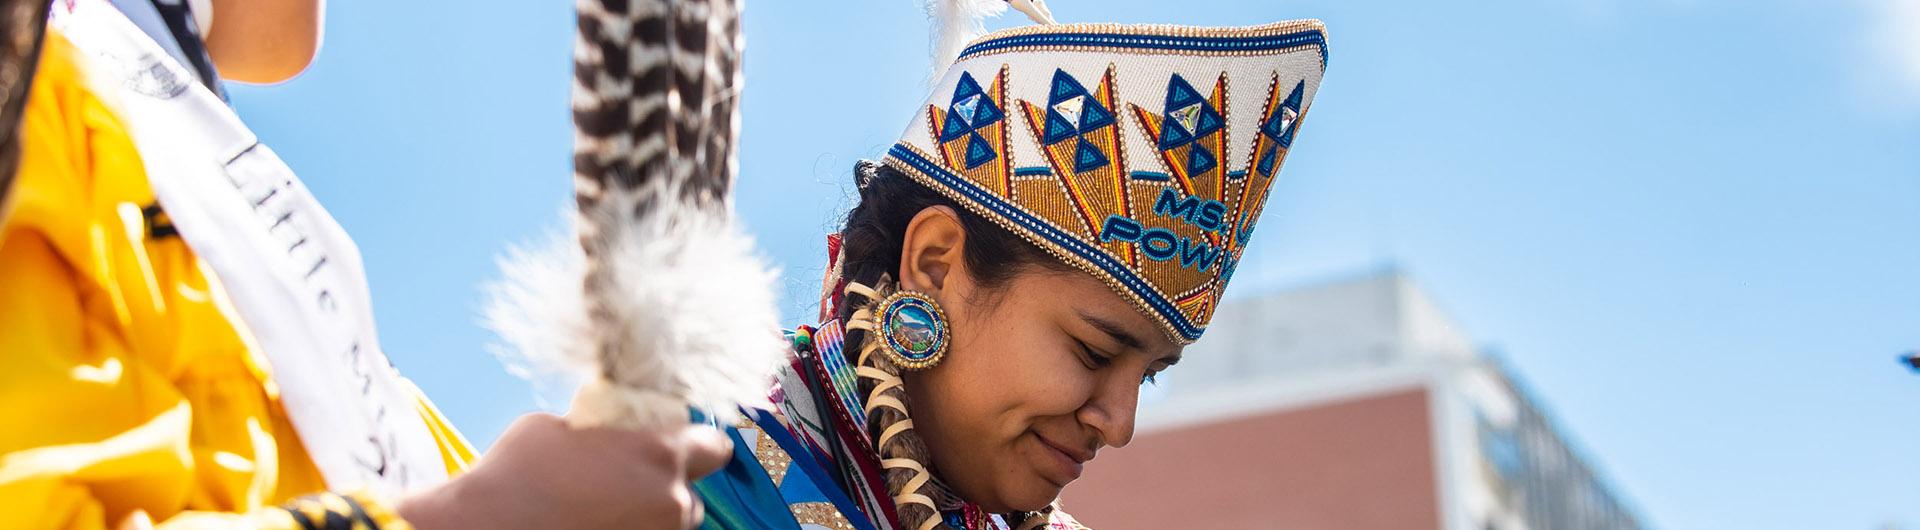 A woman dressed in Native American attire